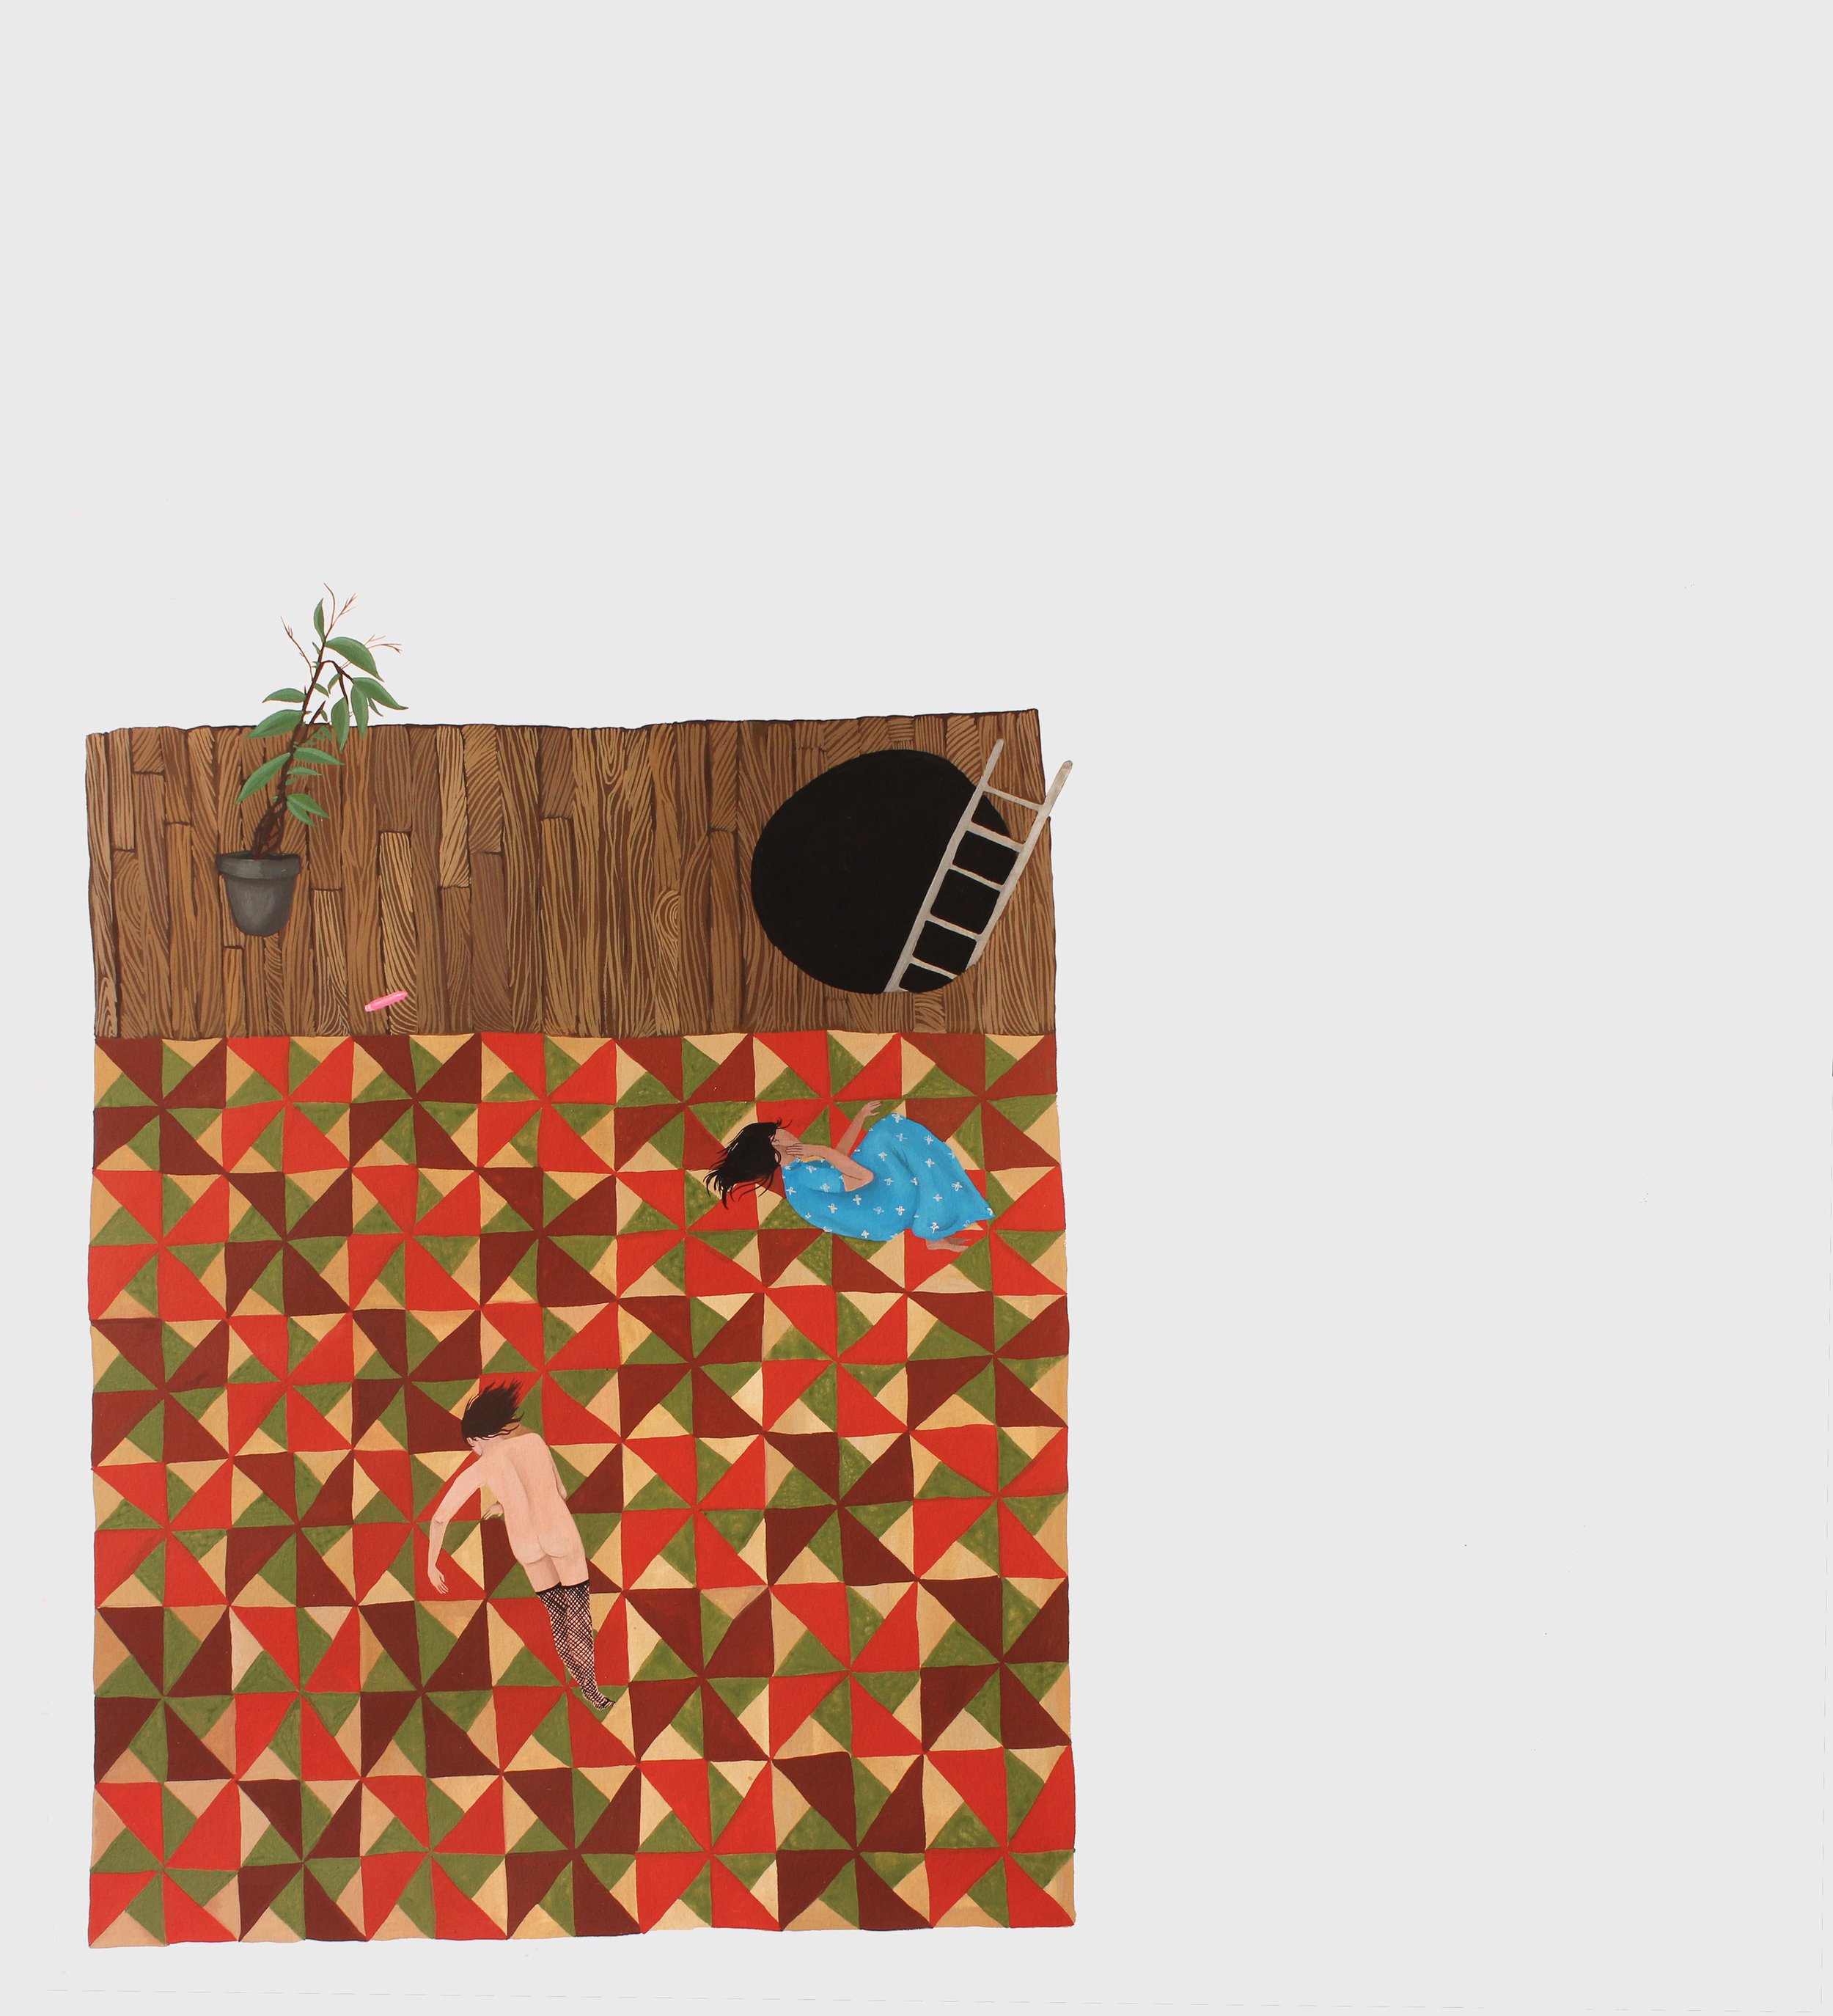 POINSETTIA | 36 x 31.25 inches / 91 x 79 cm, gouache on paper, framed, 2018